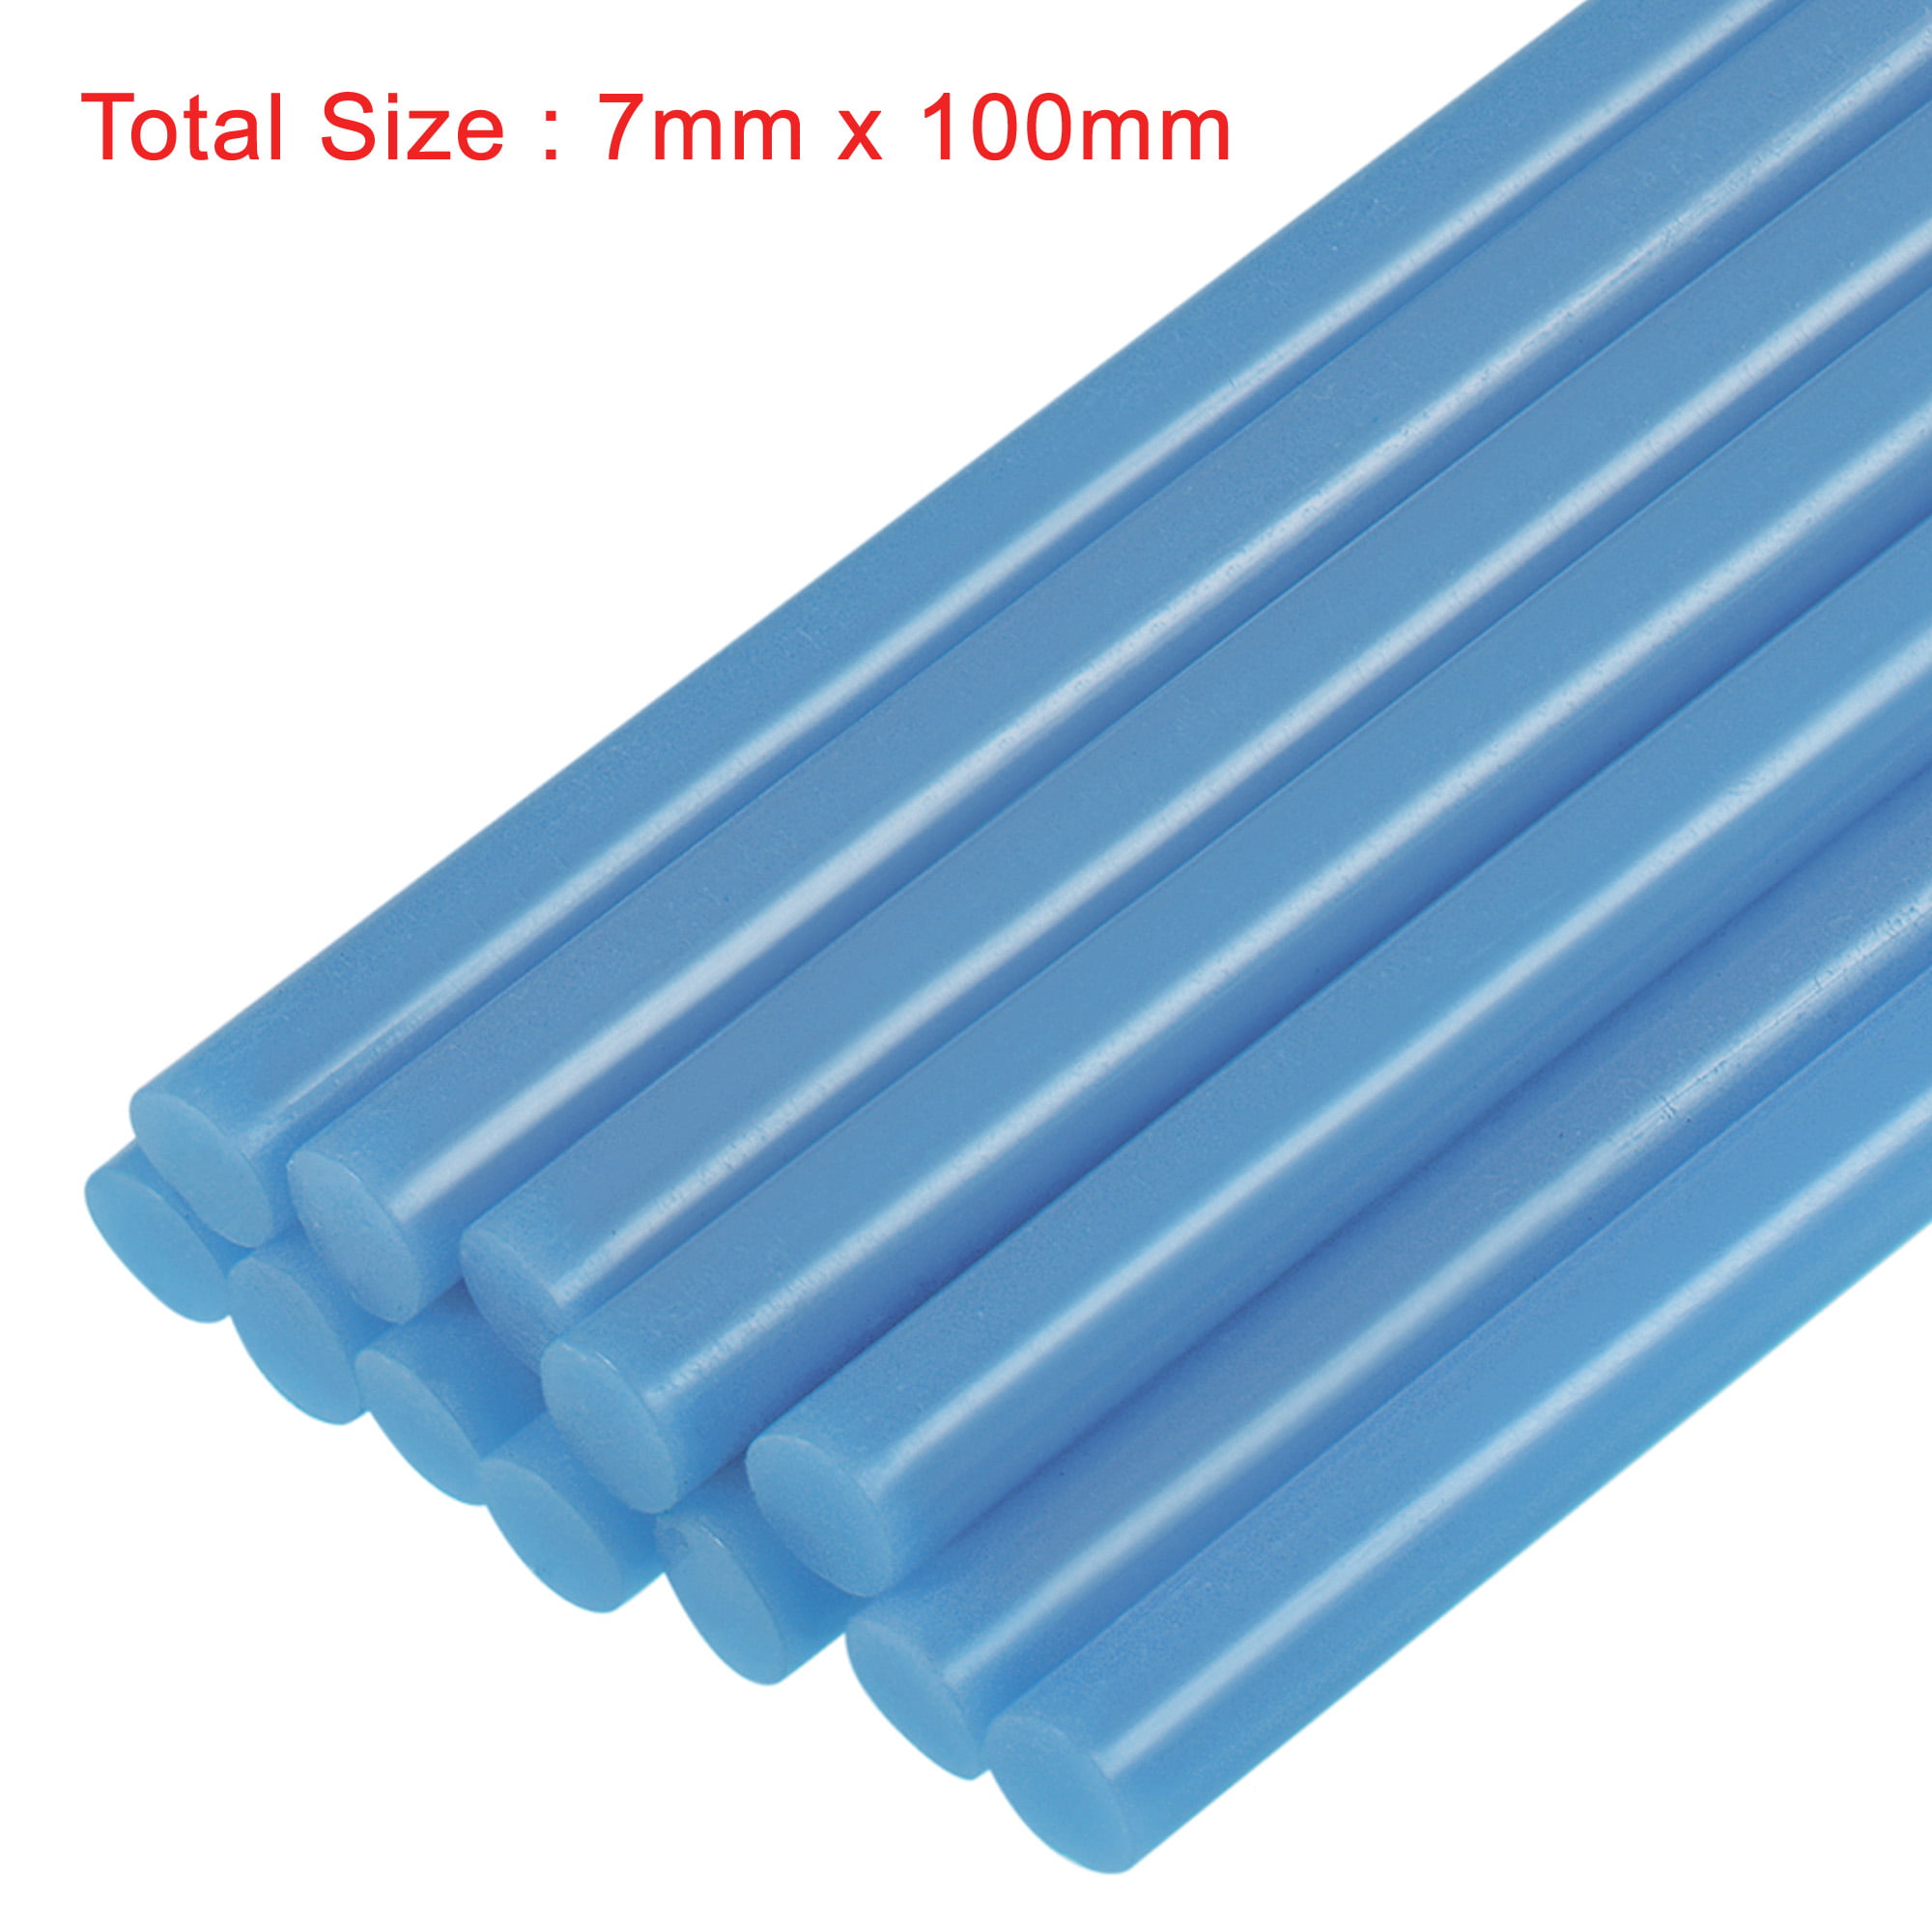 Yosoo 14pcs Mix Color Hot Melt Glue Stick Adhesive Sticks Kit